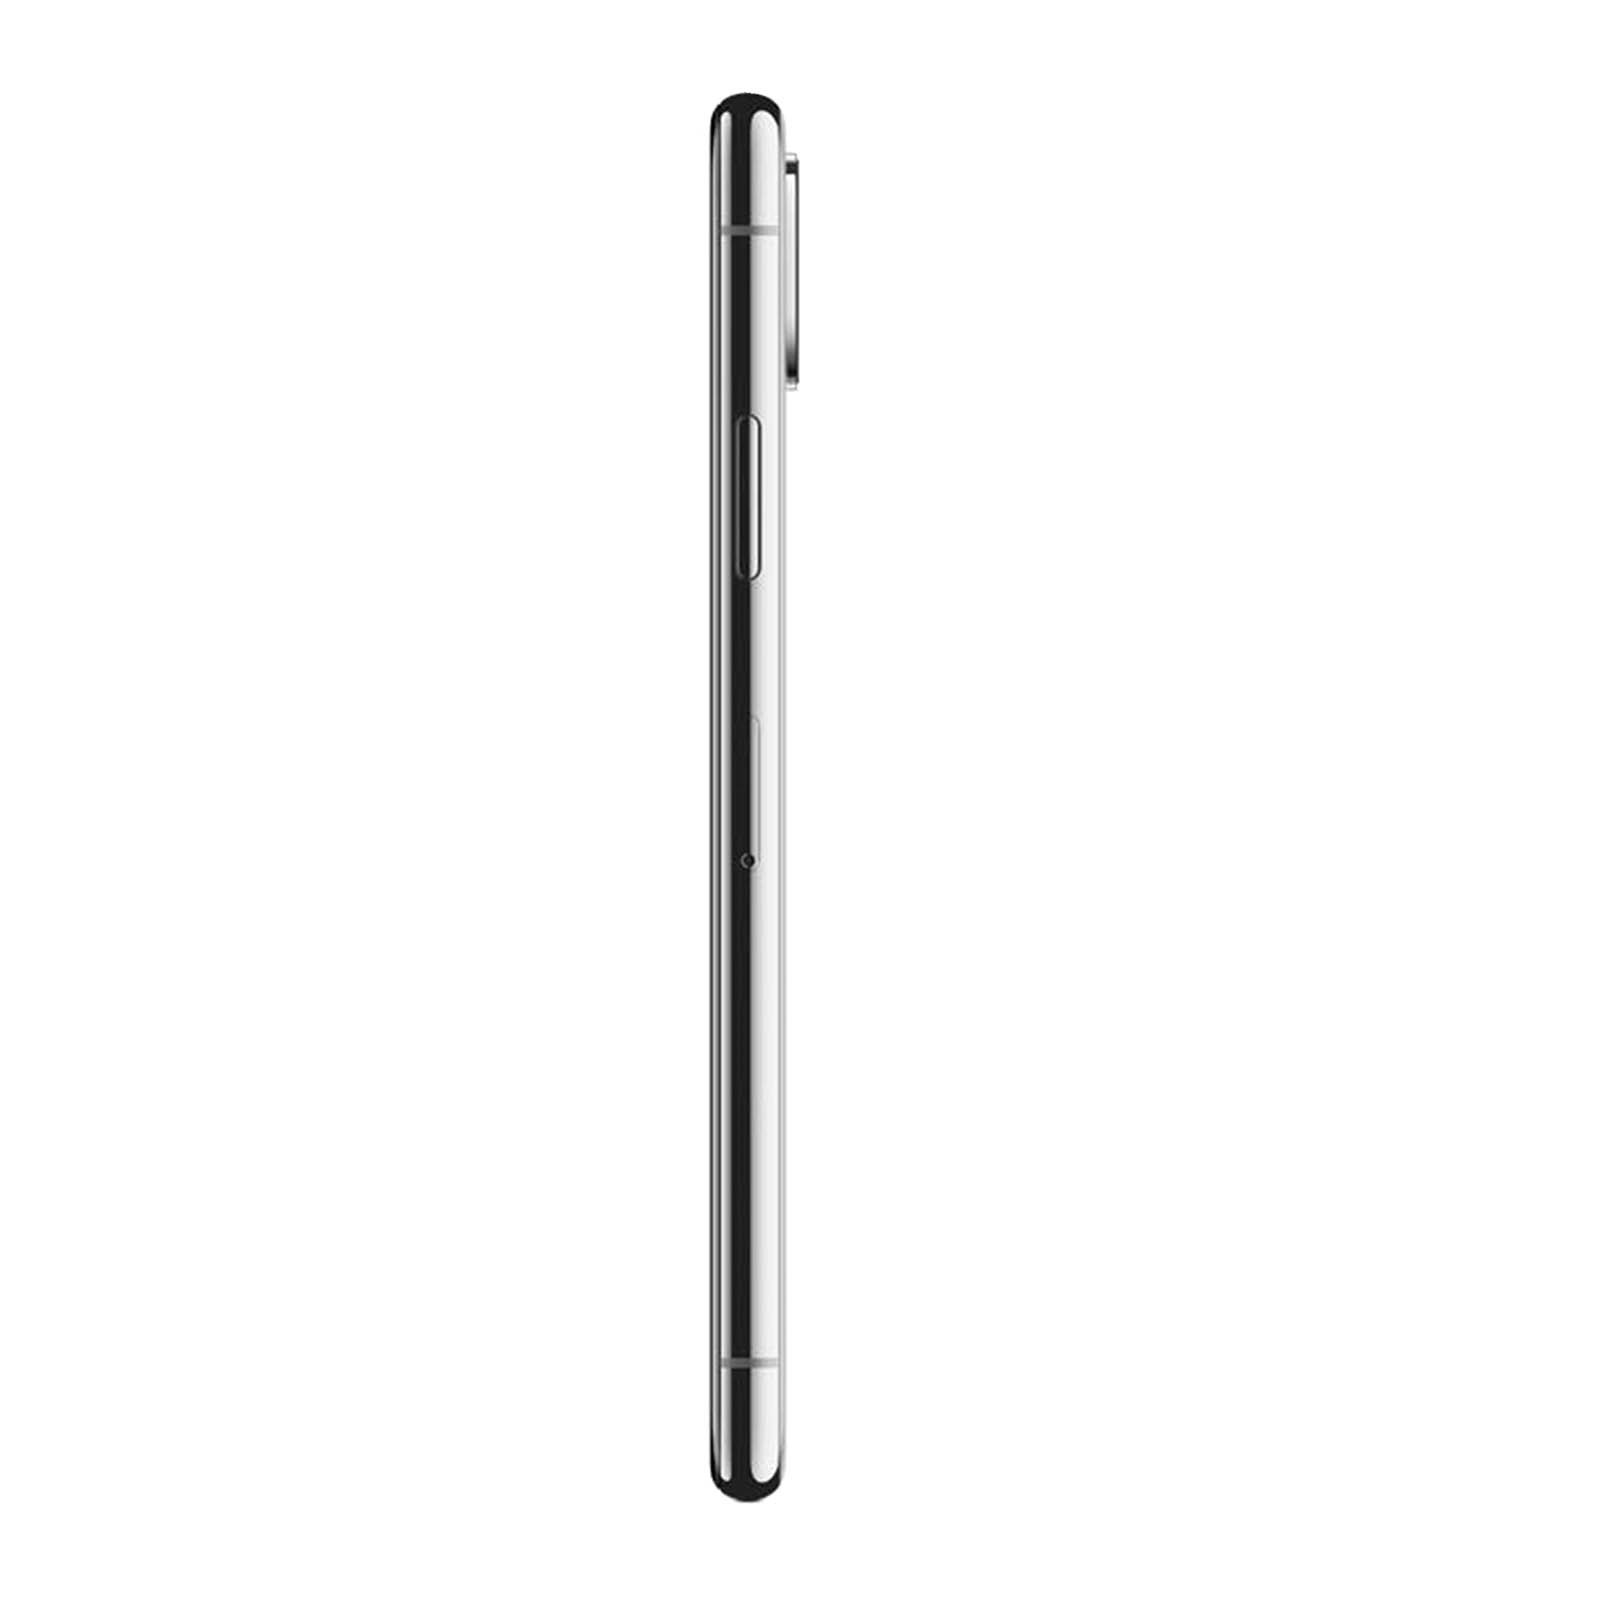 Apple iPhone XS Max 64GB Silver Good - Unlocked